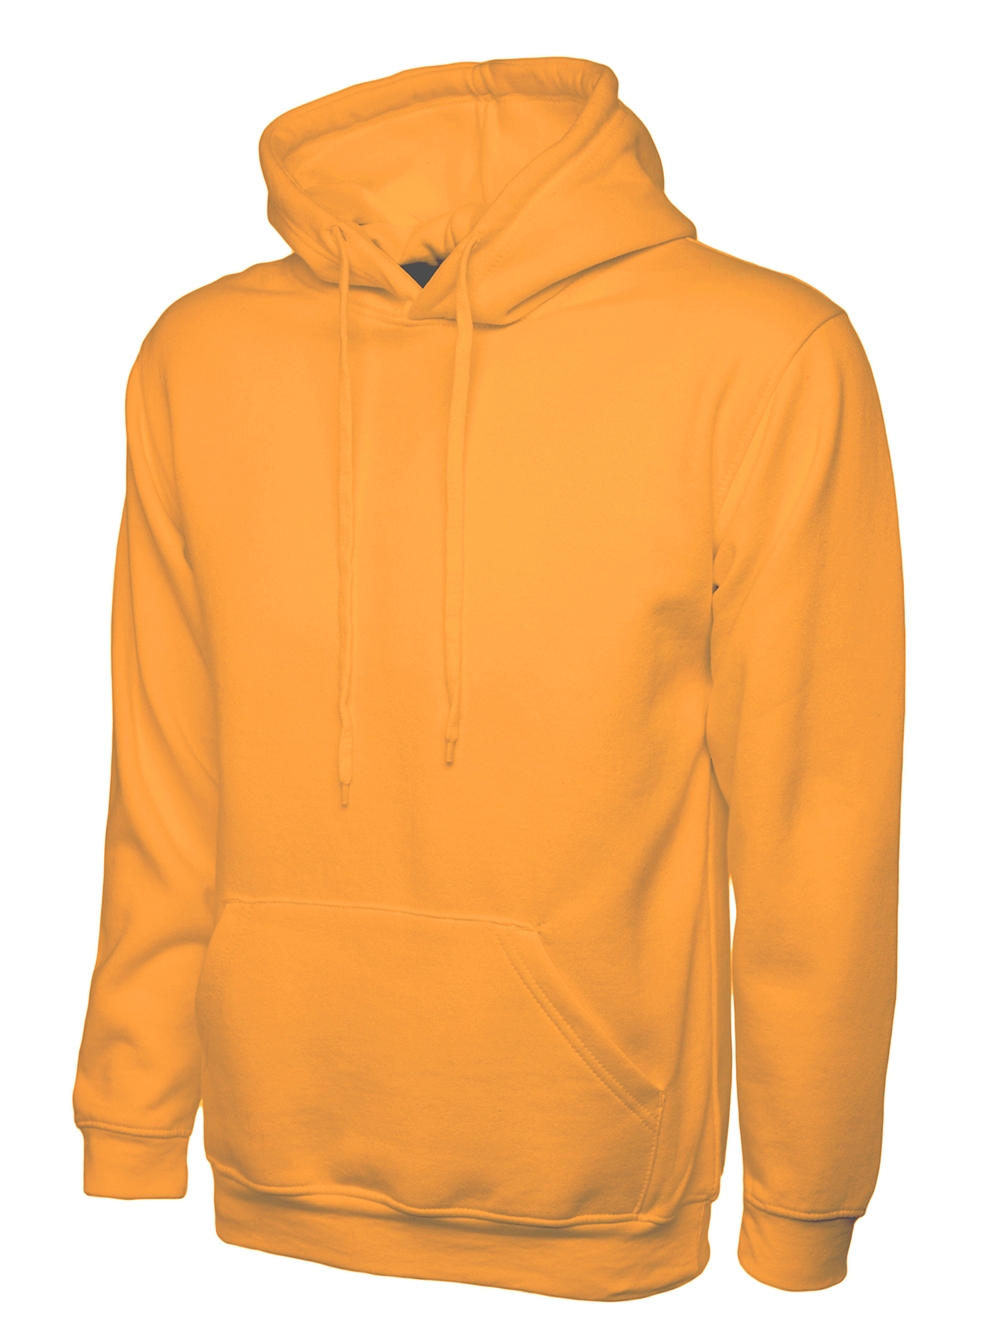 Orangehoodedsweatshirt